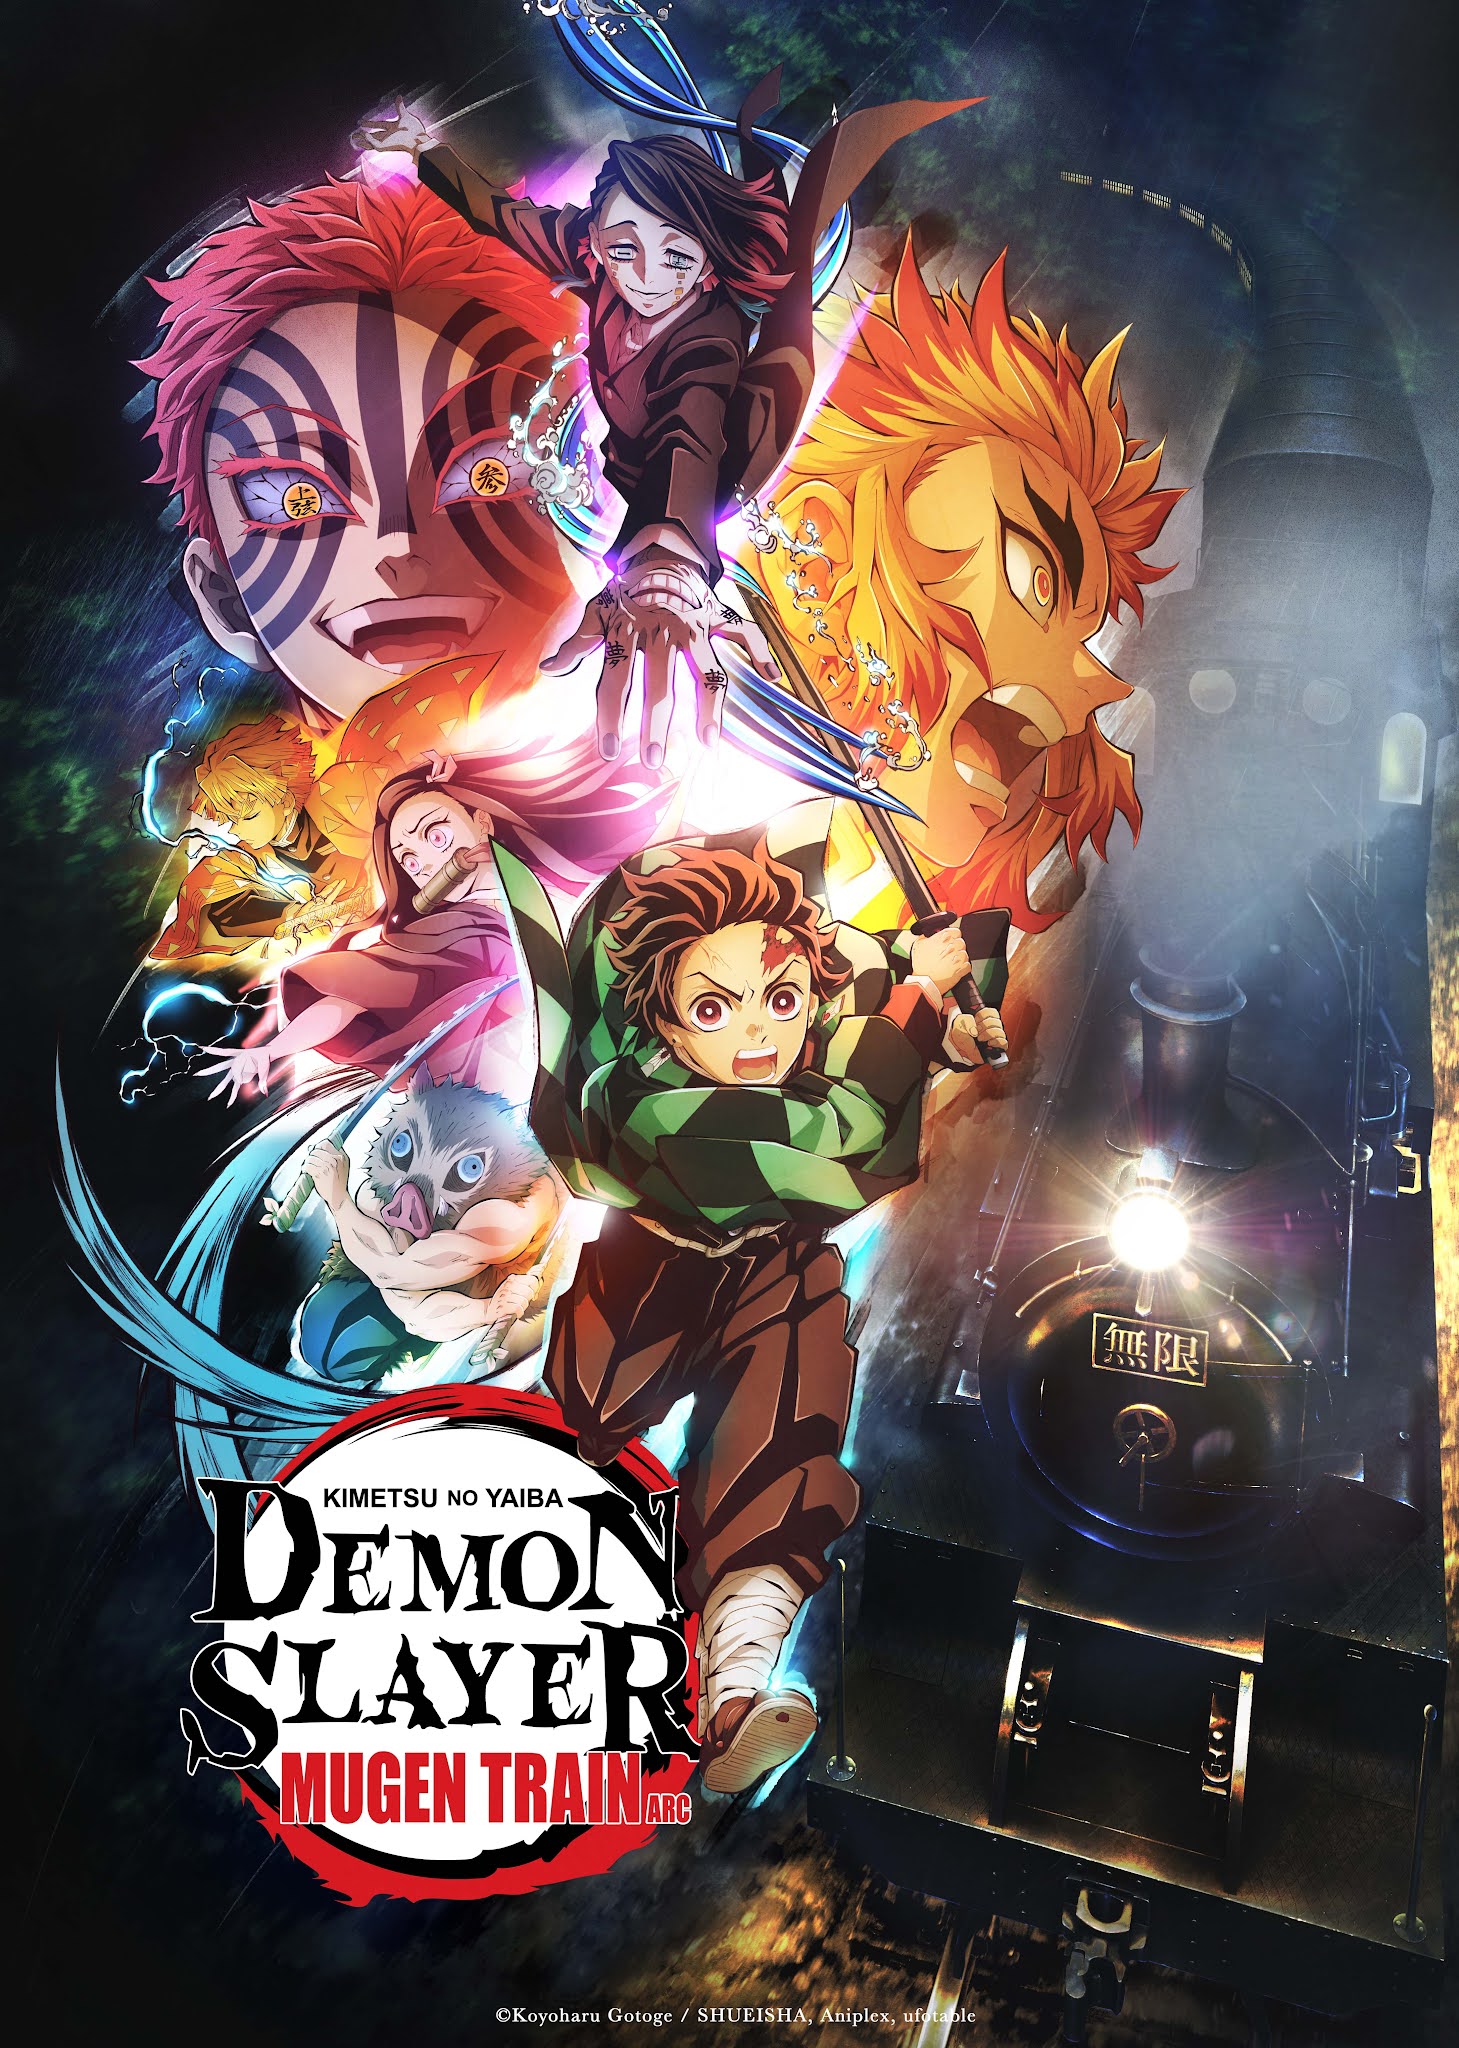 Demon Slayer: Kimetsu no Yaiba Swordsmith Village Arc Anime: Where to  Watch, Trailers & More - Crunchyroll News - Crunchyroll News